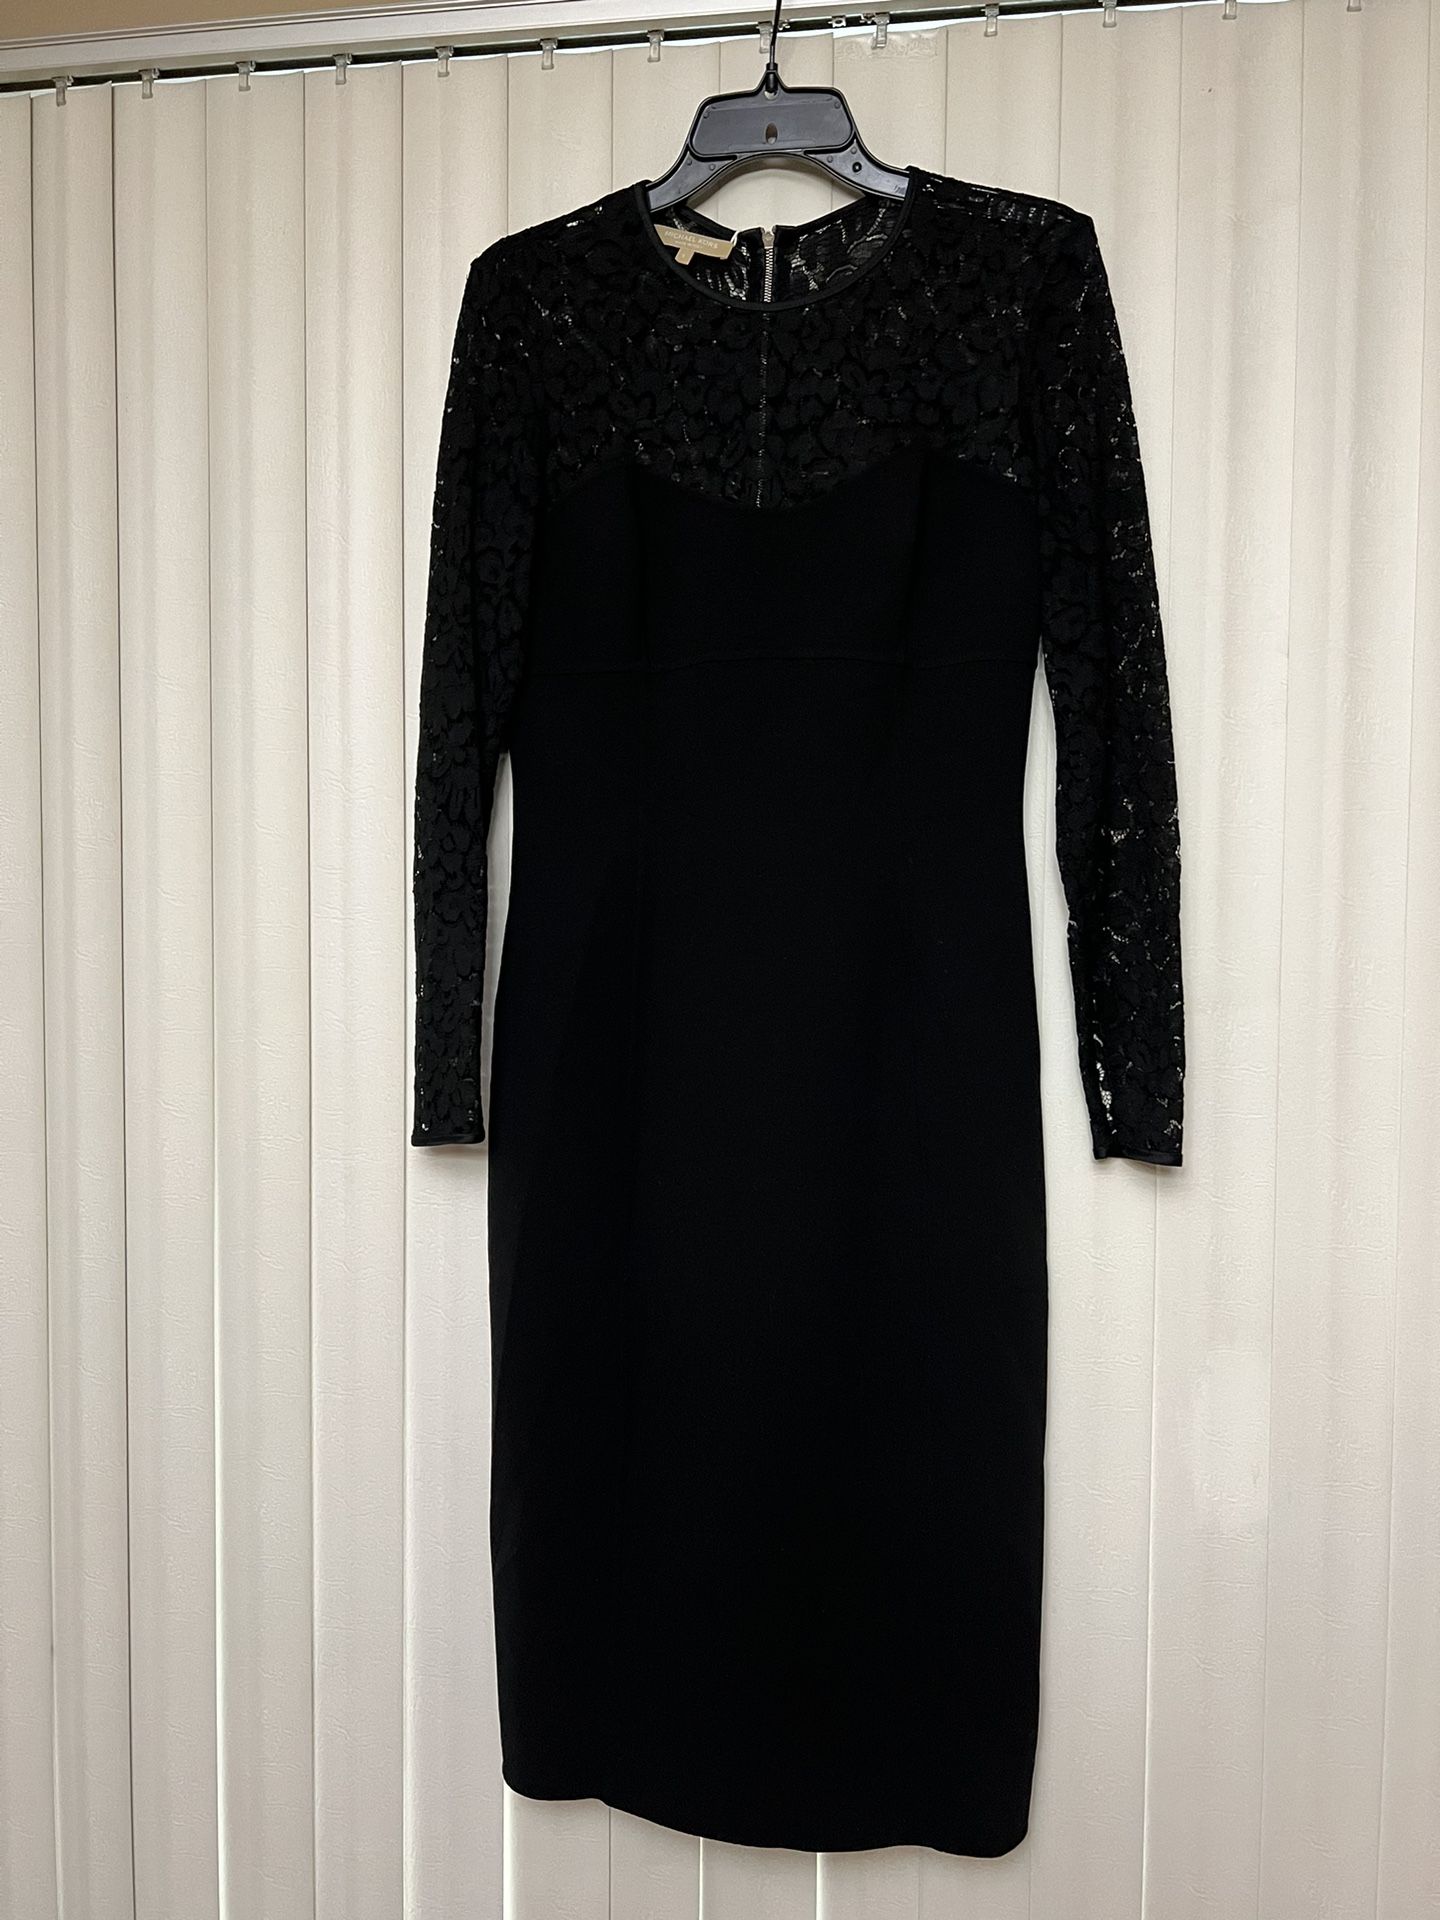 Michael Kors Black Dress Sz 6